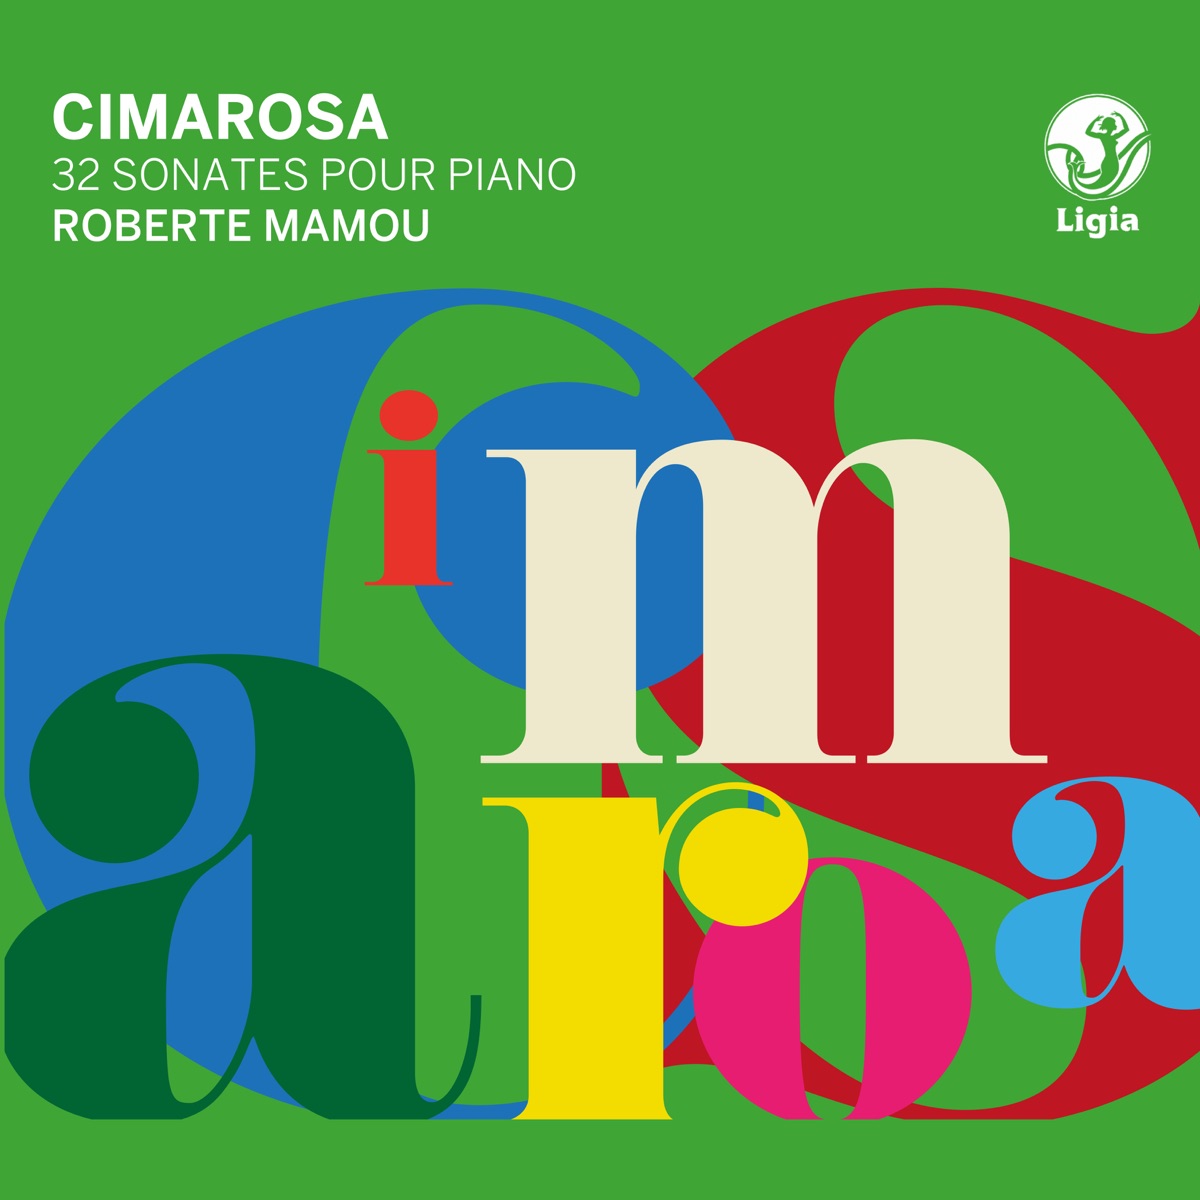 Cimarosa: 32 sonates pour piano by Roberte Mamou on Apple Music